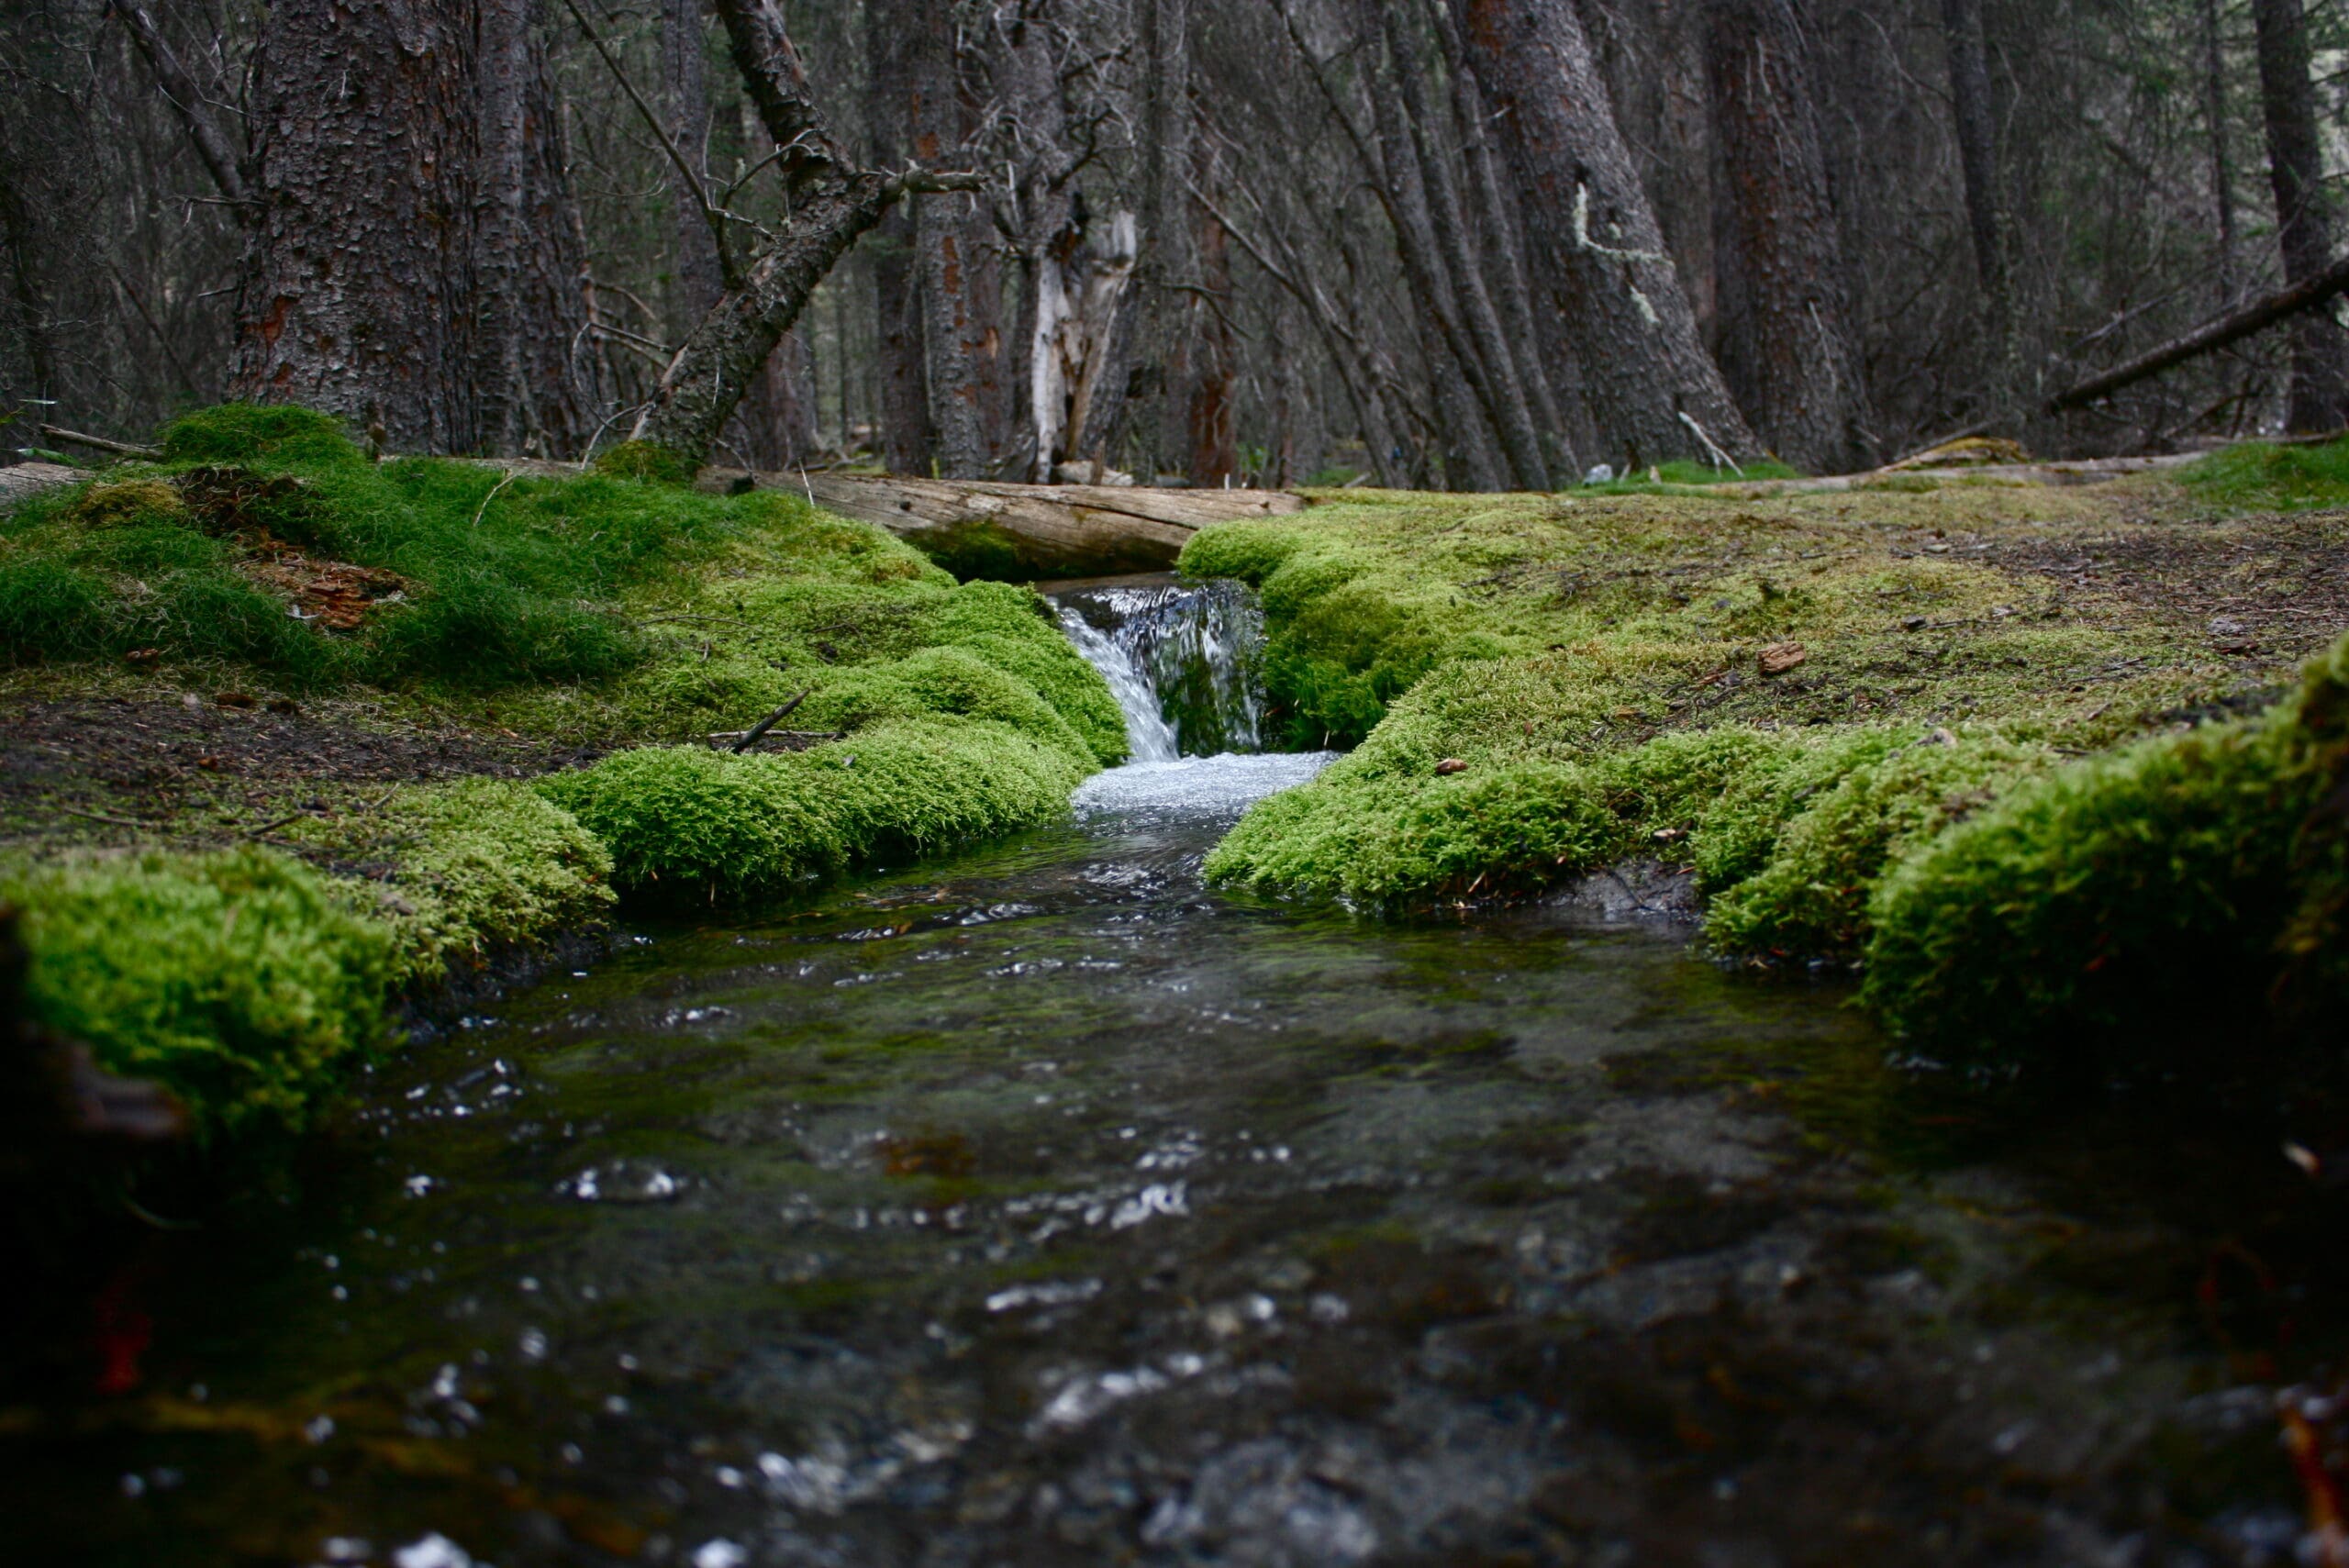 A lush green mossy creek scene